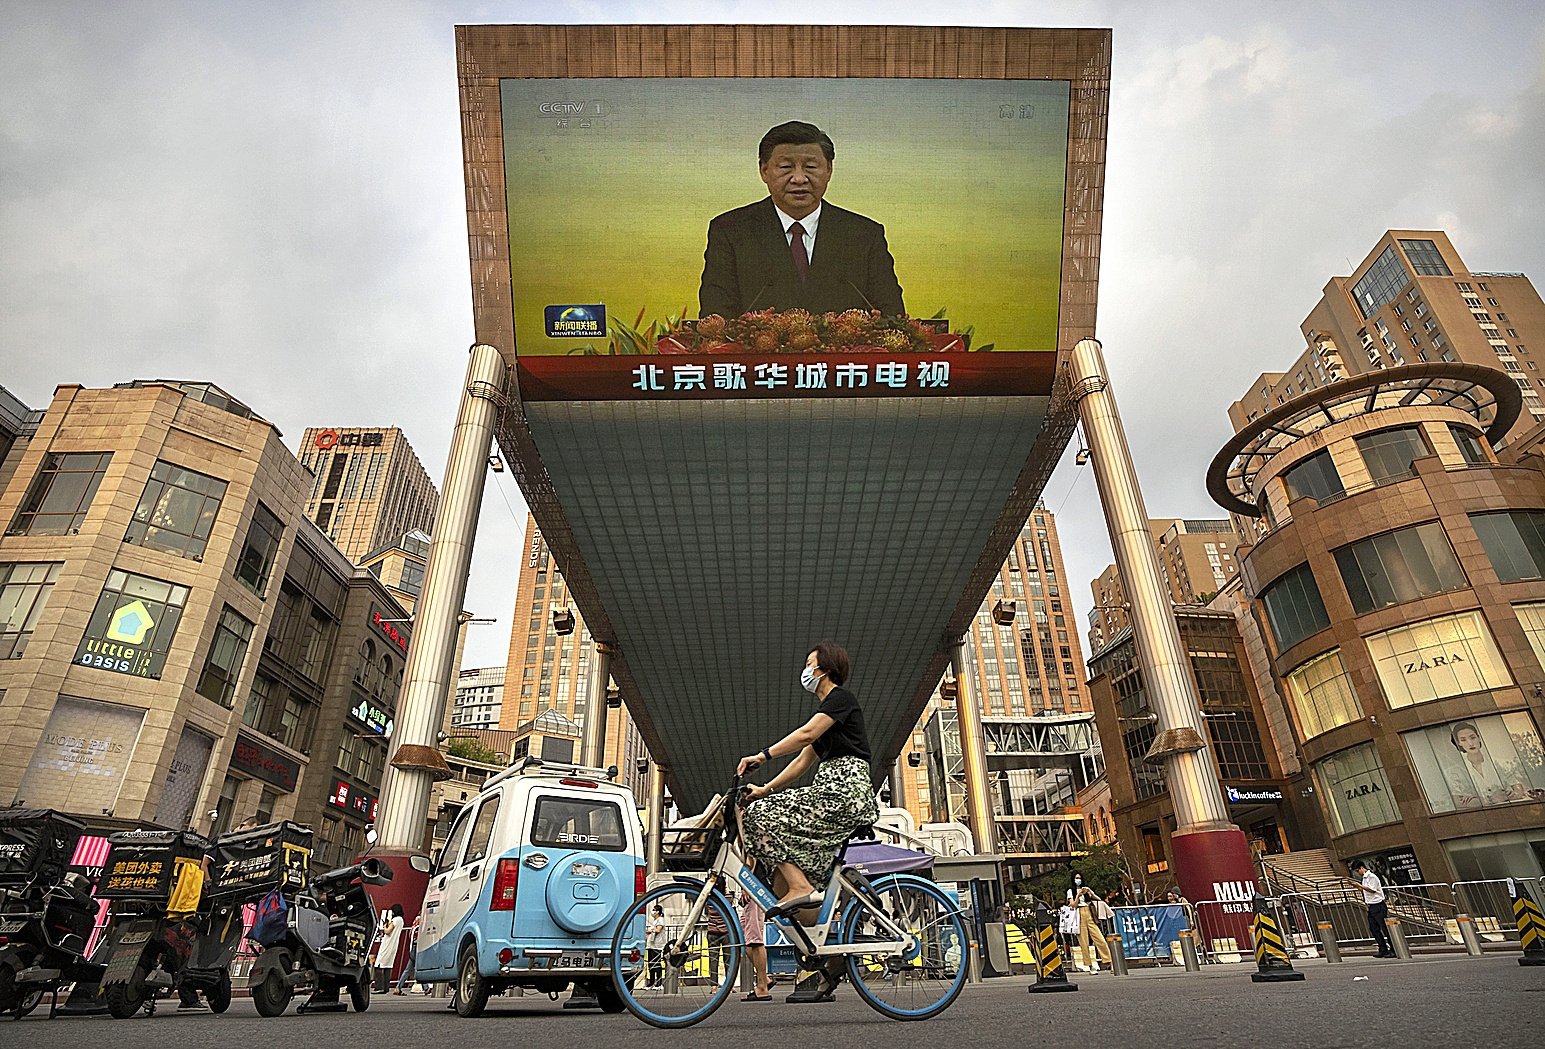 Una mujer en bicicleta pasa frente a una gran pantalla que proyecta un retrato de Xi Jinping.